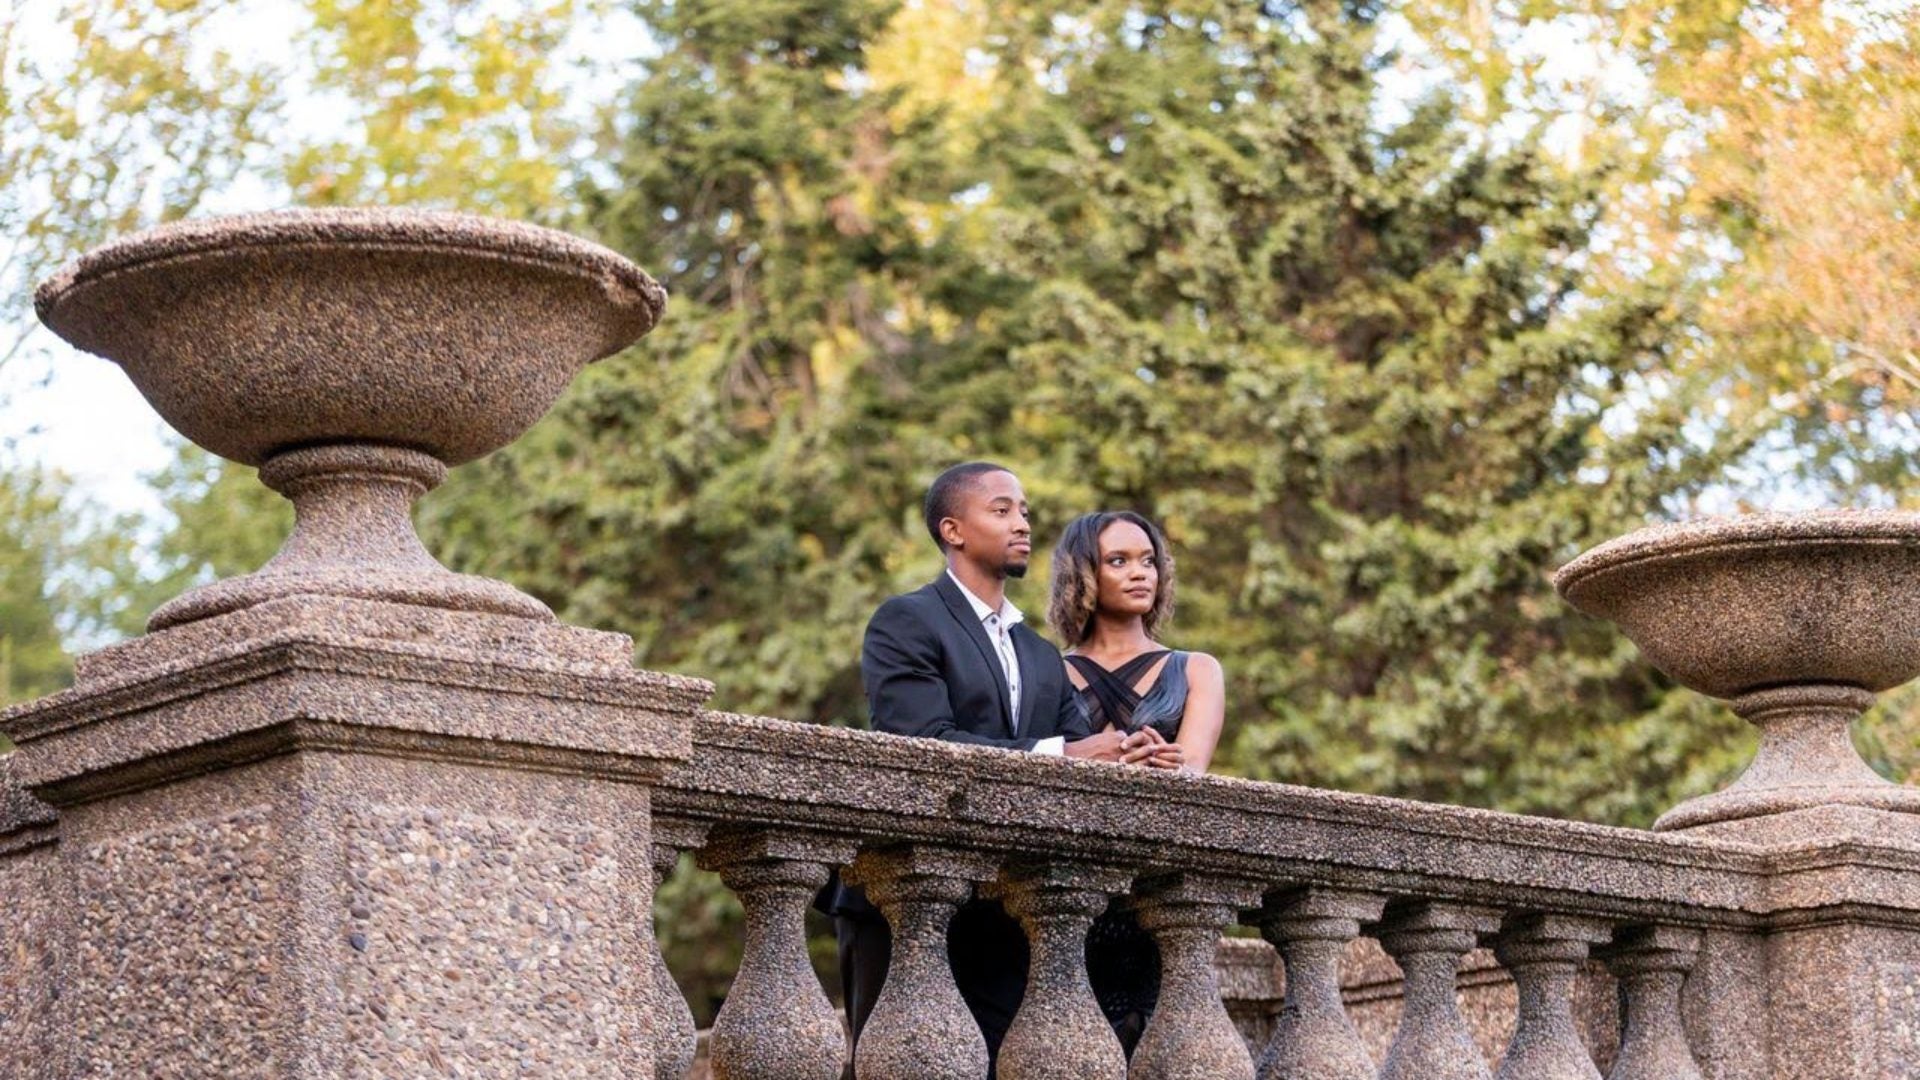 Nia Henry and Shakeel Luke's Love Story Started At Howard University